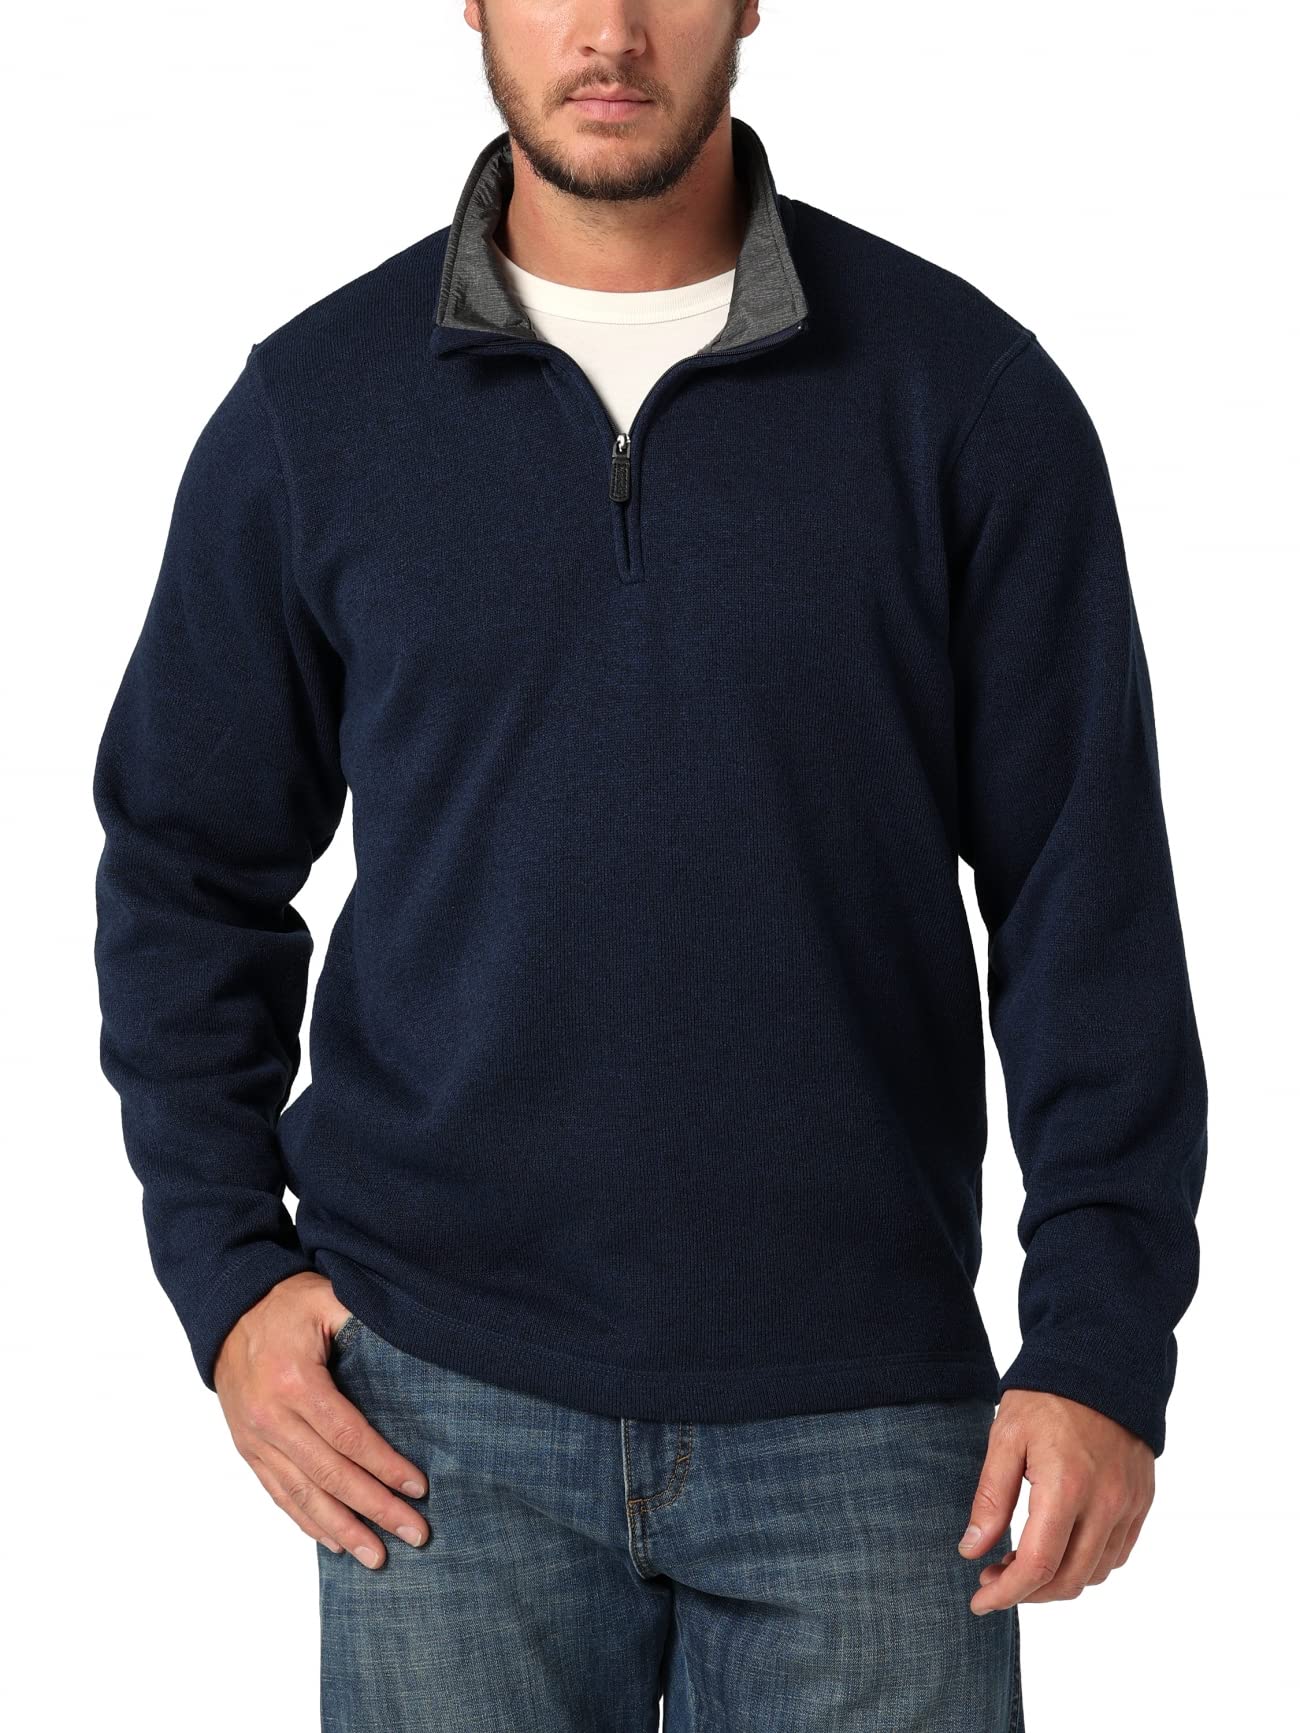 Wrangler Authentics Men's Long Sleeve Fleece Quarter-Zip, Mood Indigo, X-Large